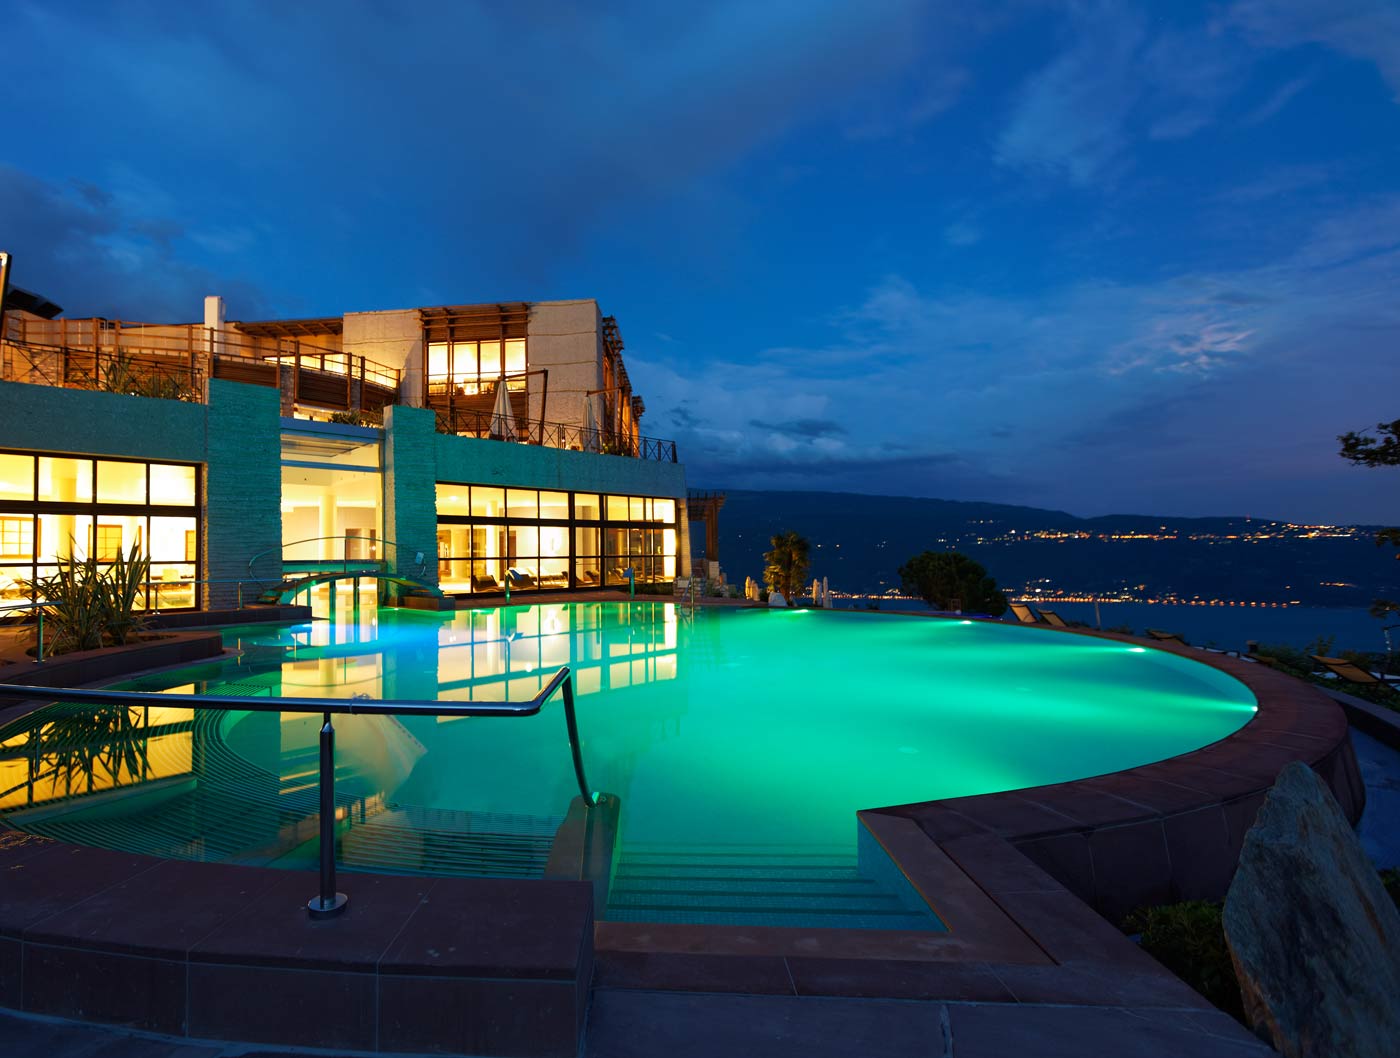 SPA Resort Lefay: dettaglio piscina in notturna